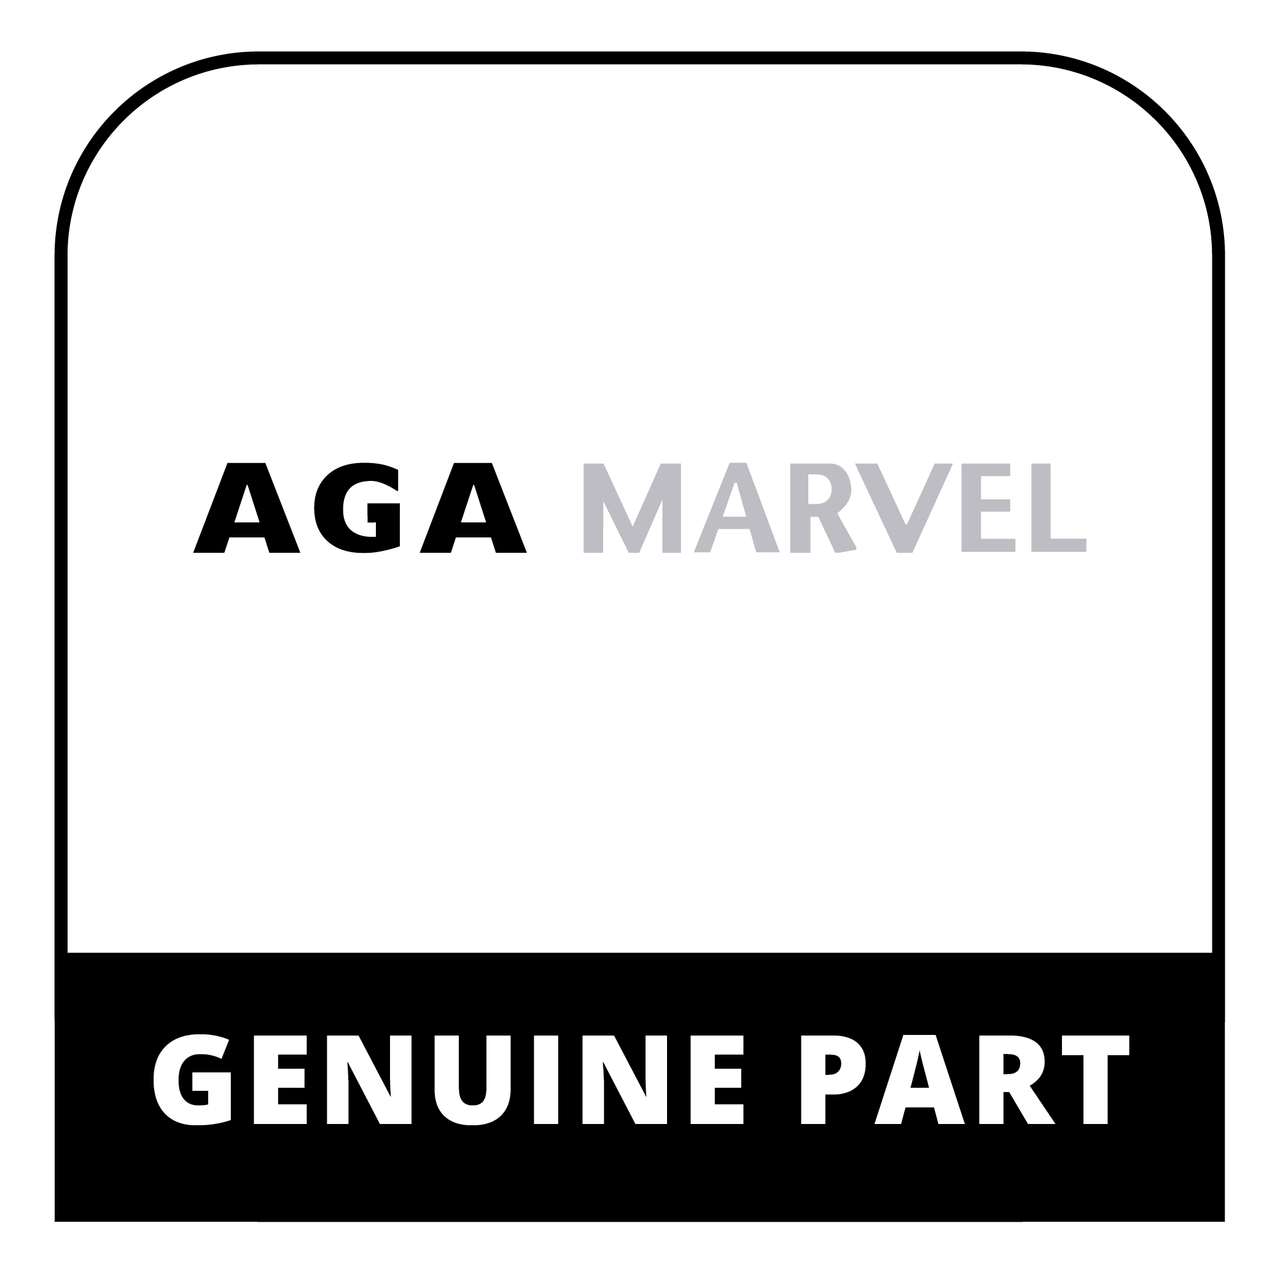 AGA Marvel R4810 - Comb Hd Housing(Emx)Bft11522/1 - Genuine AGA Marvel Part